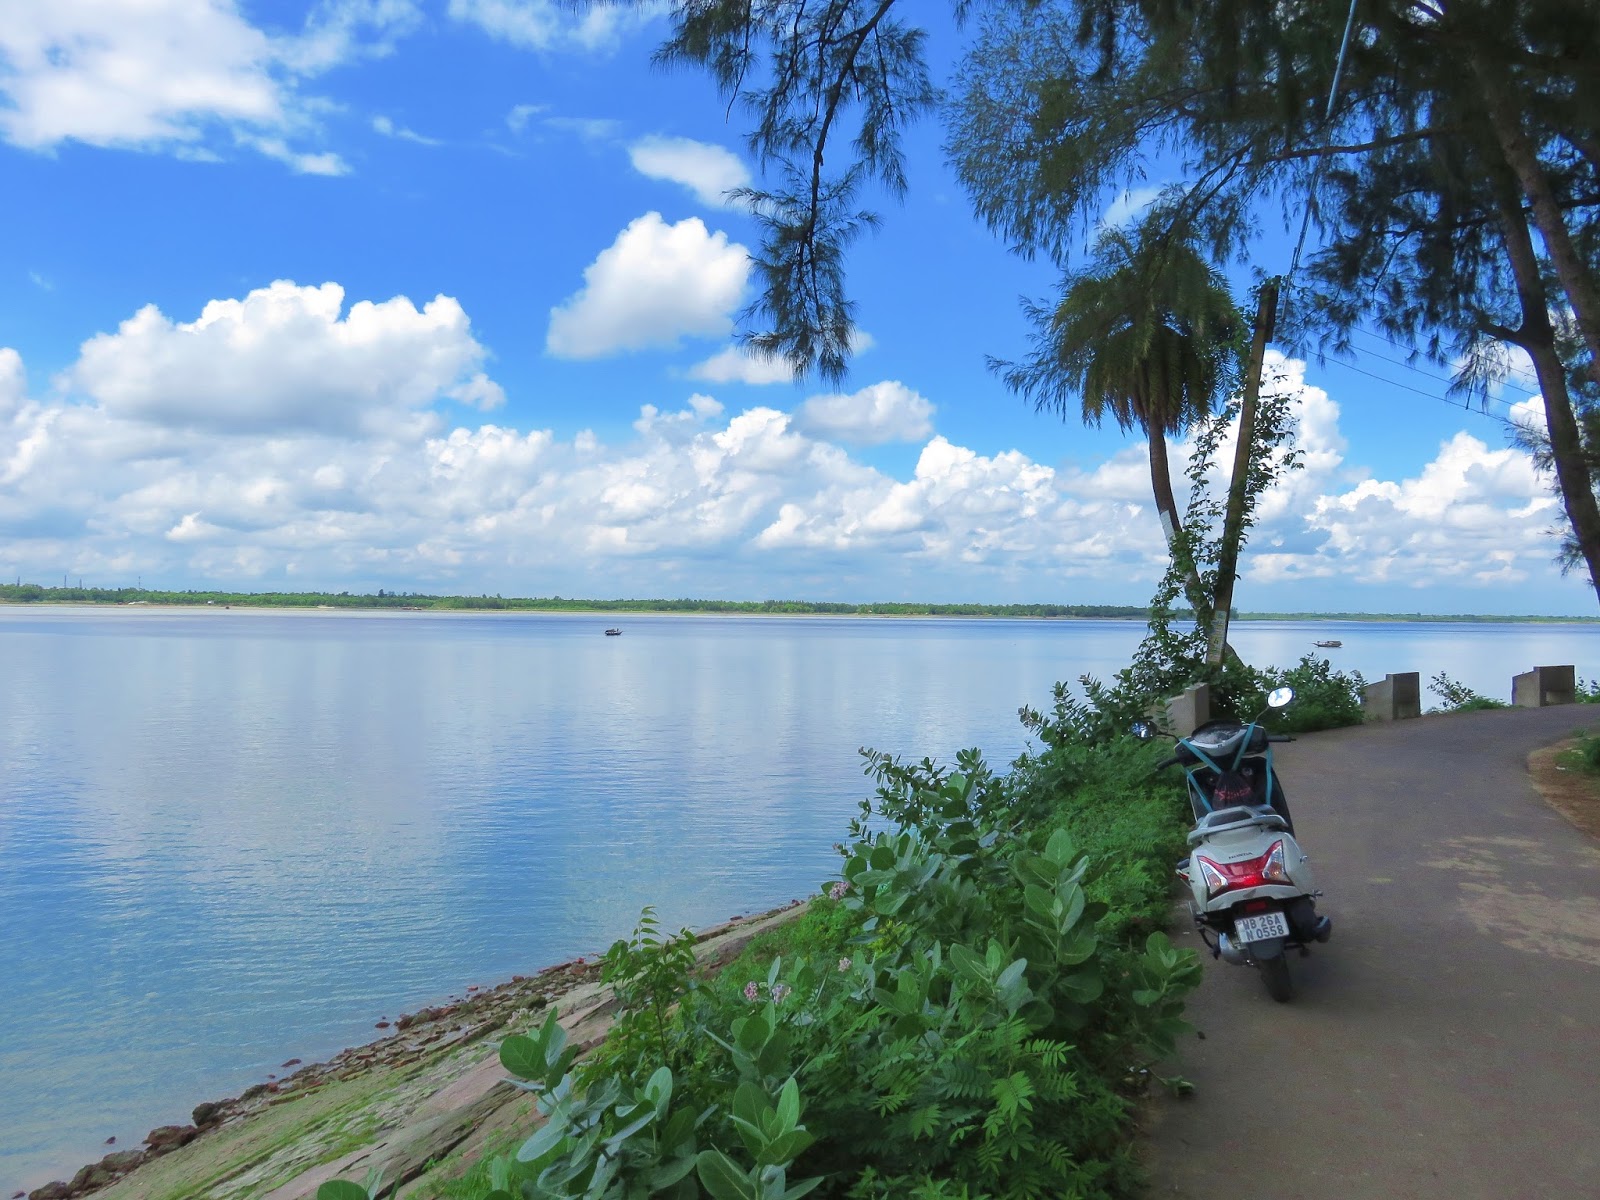 Gadiara riverside west bengal tourism gadiara west bengal